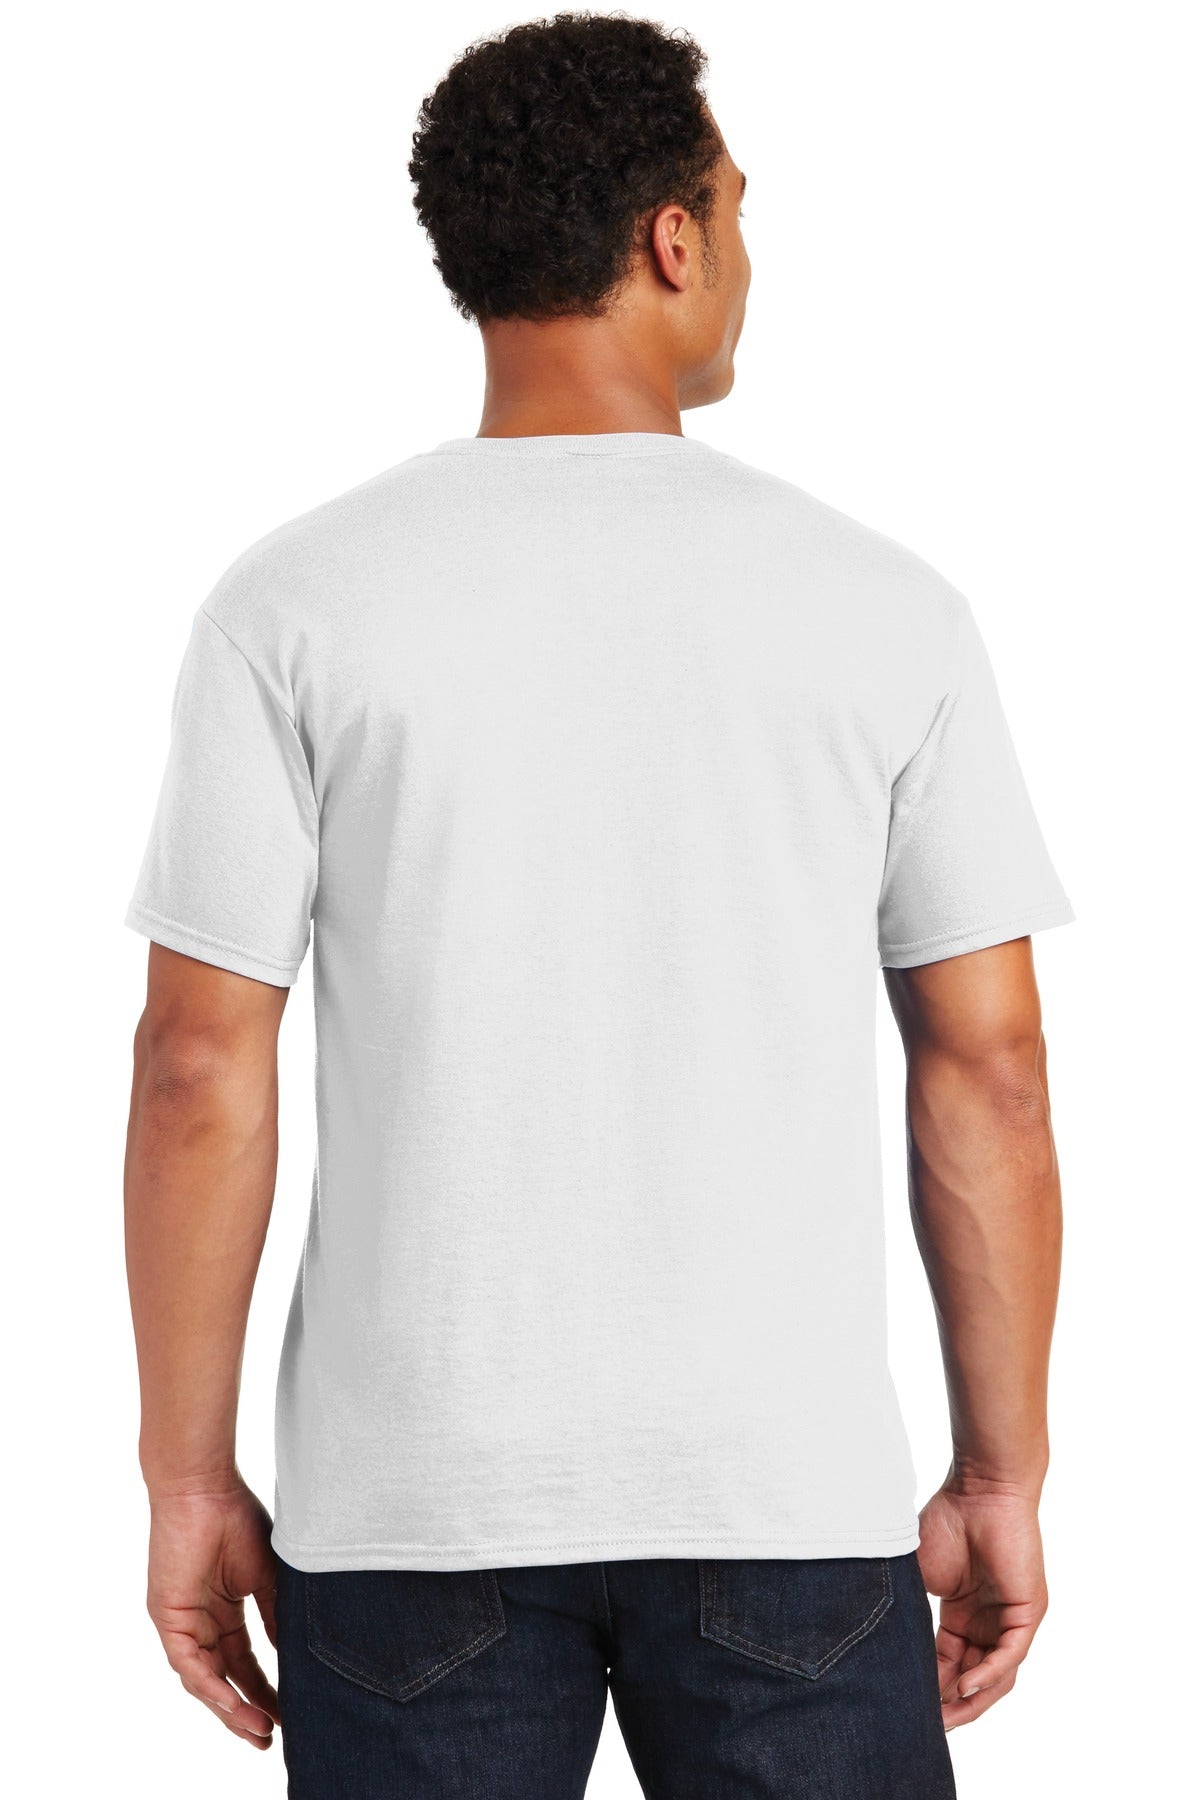 JERZEES® - Dri-Power® 50/50 Cotton/Poly T-Shirt. 29M [White] - DFW Impression